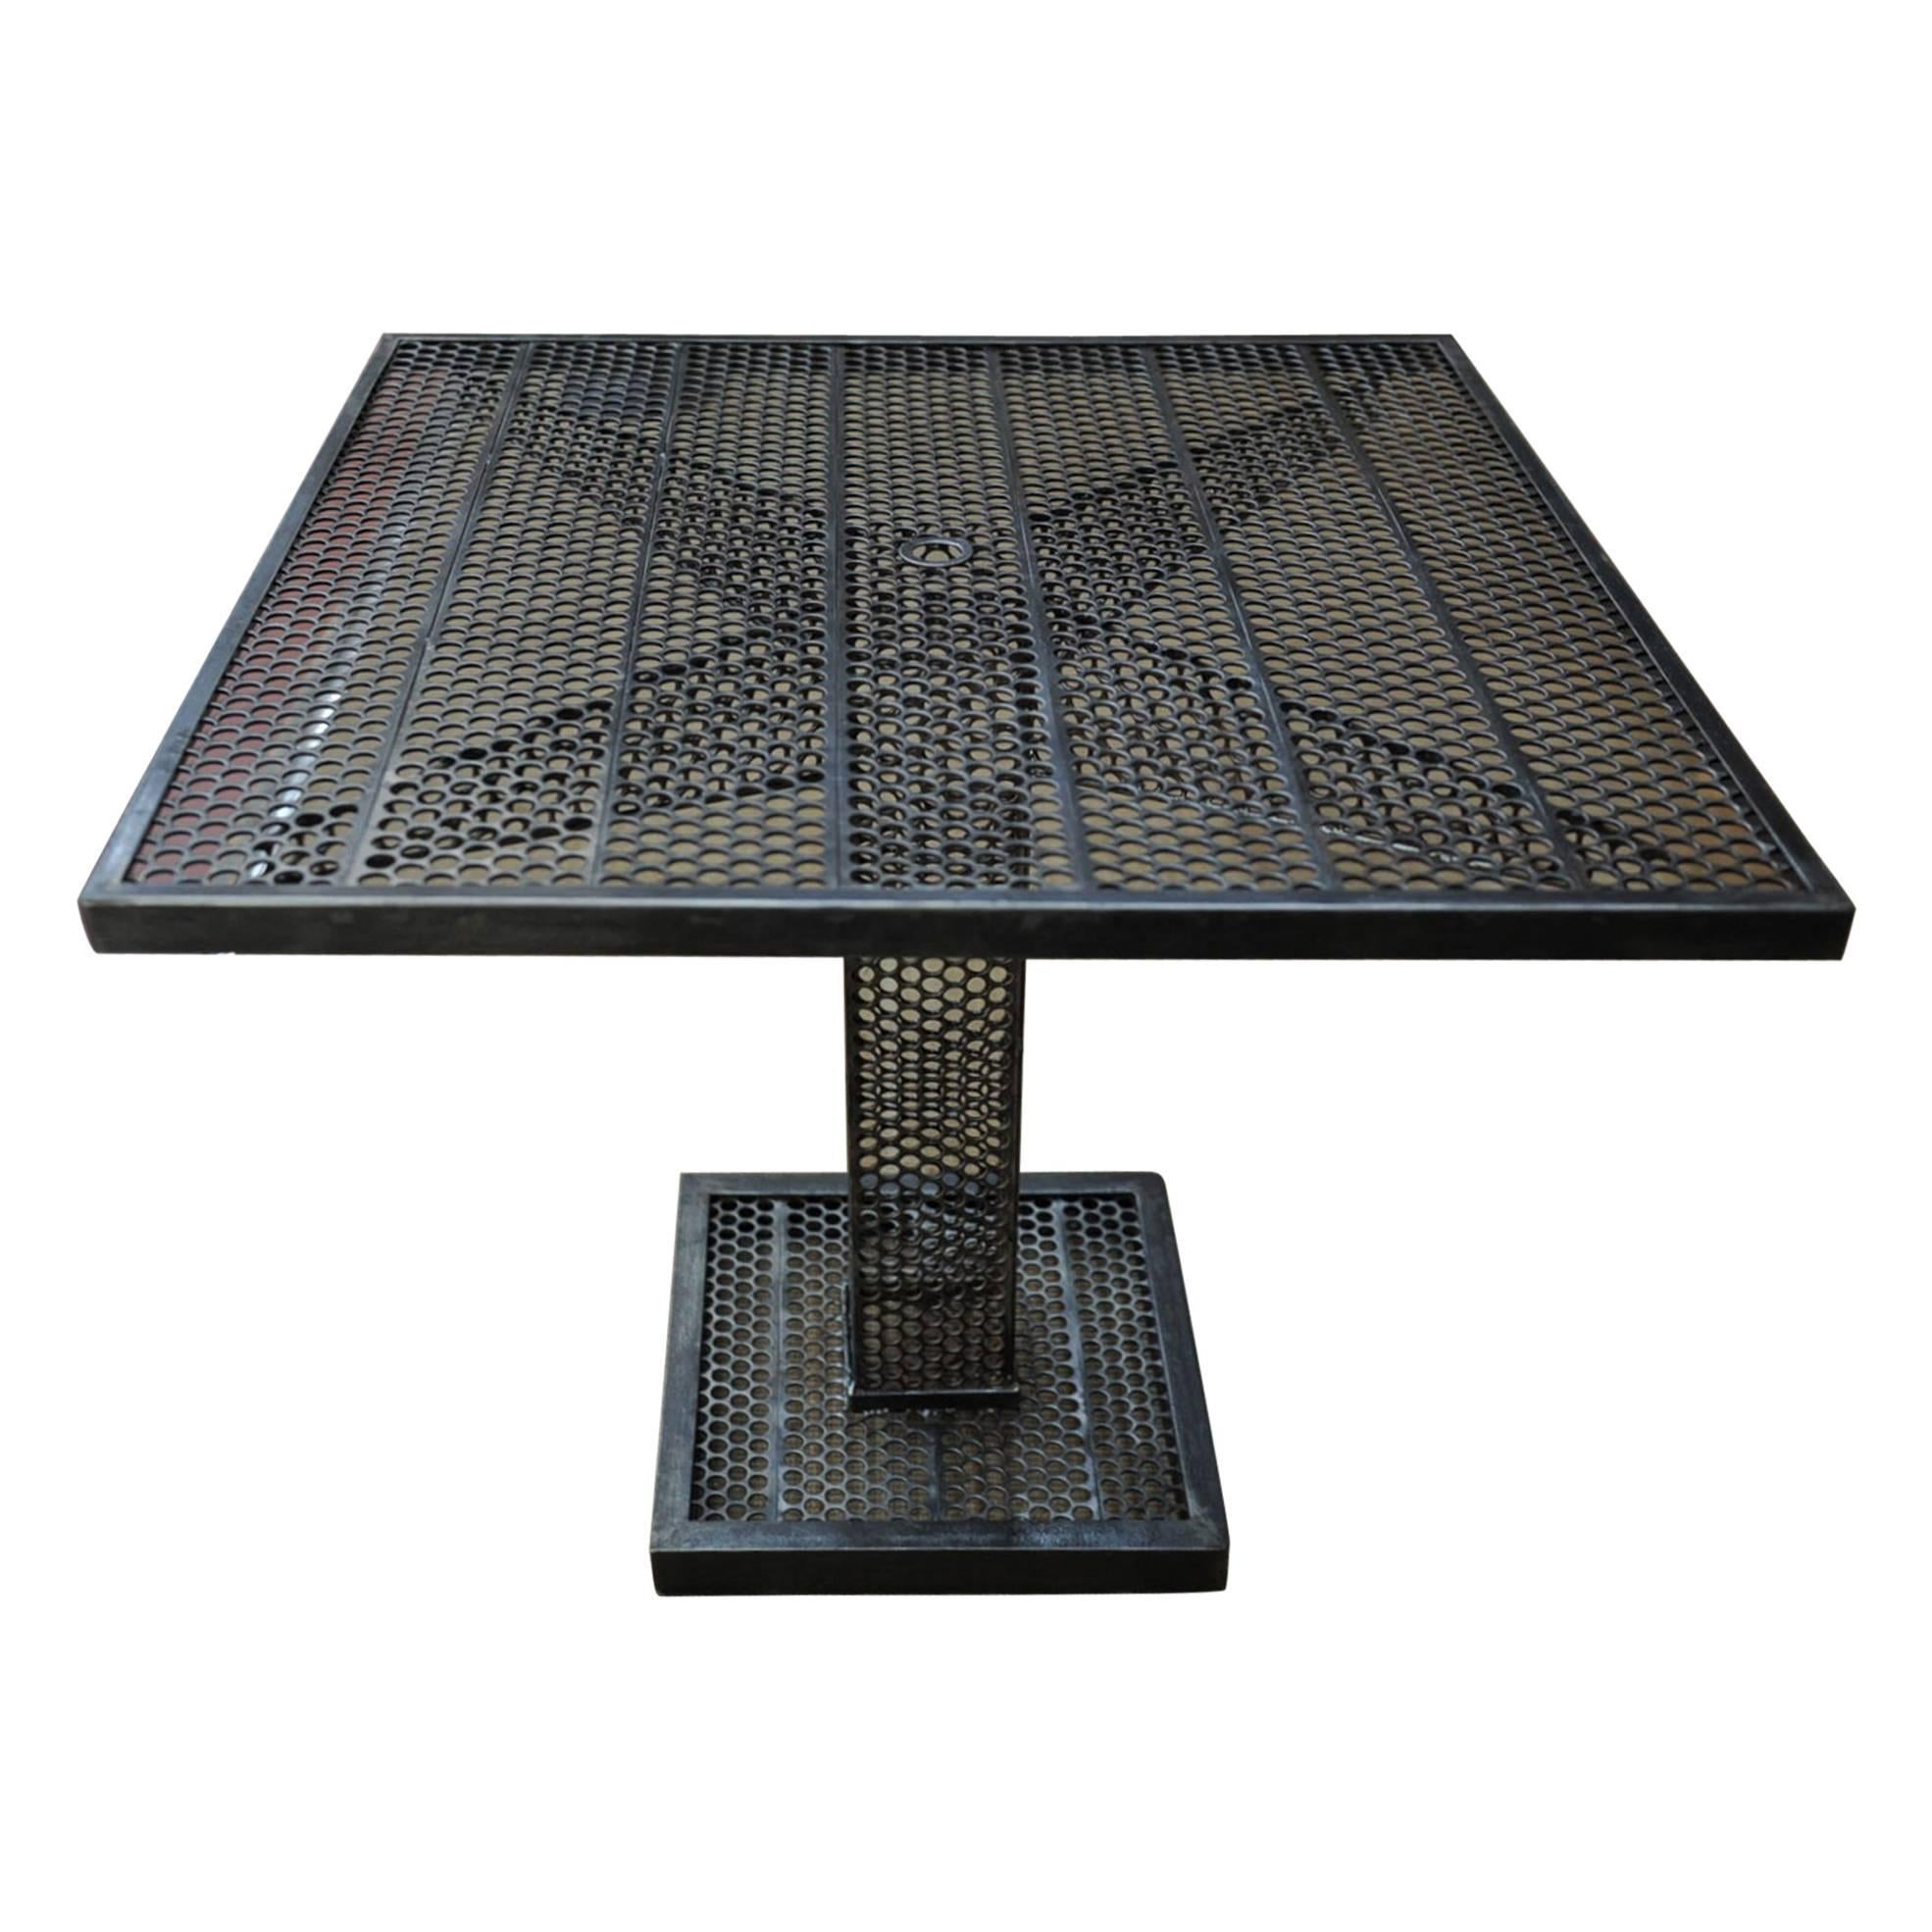 René Malaval Iron Perforated Square Table, circa 1960